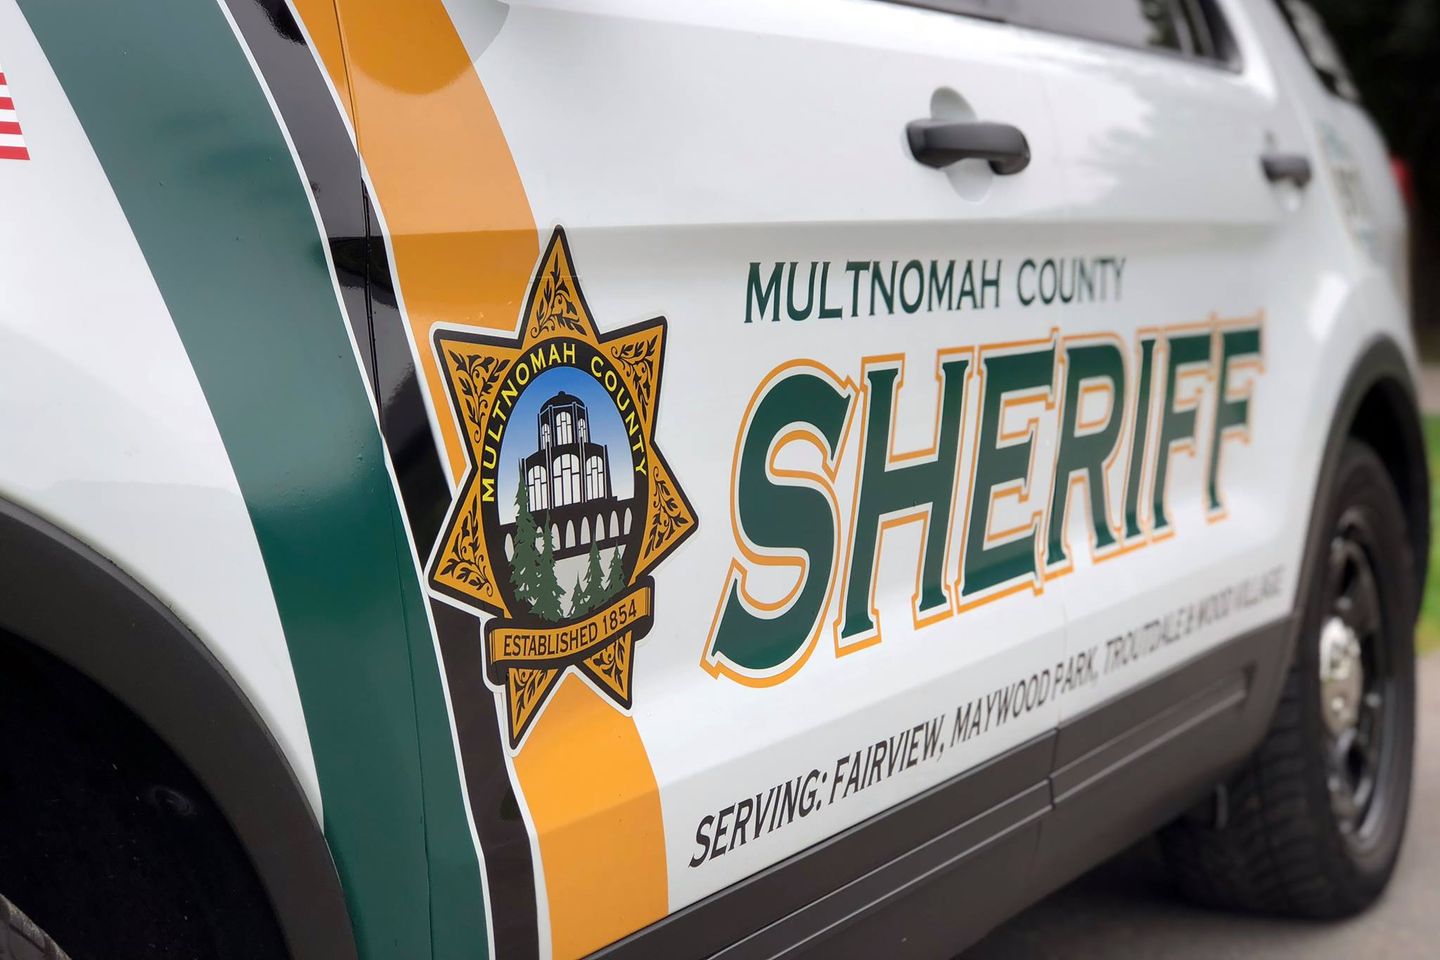 Close-up of Multnomah County Sheriff Vehicle.